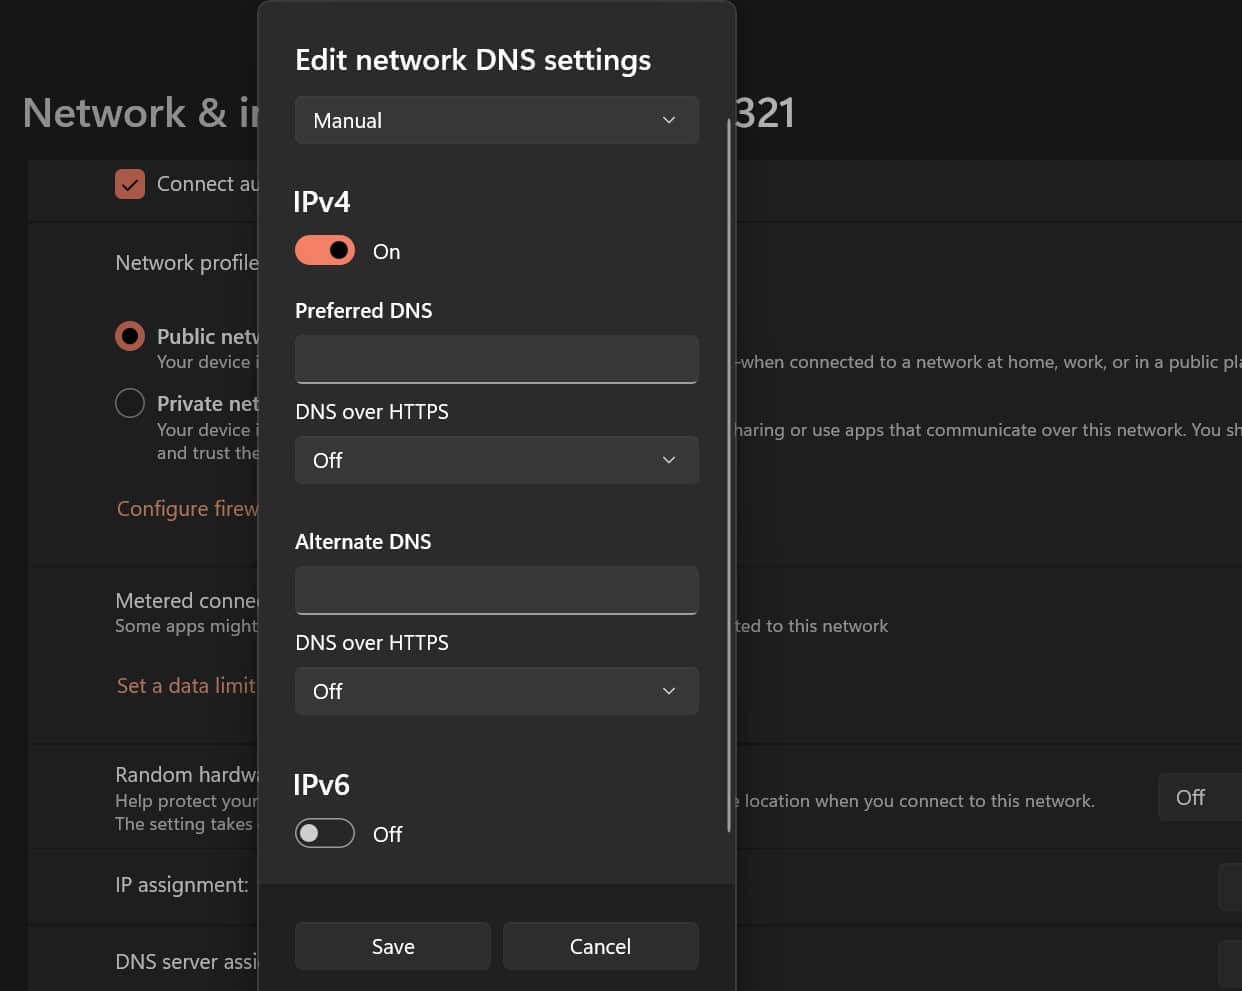 Enabling manual DNS settings on Windows